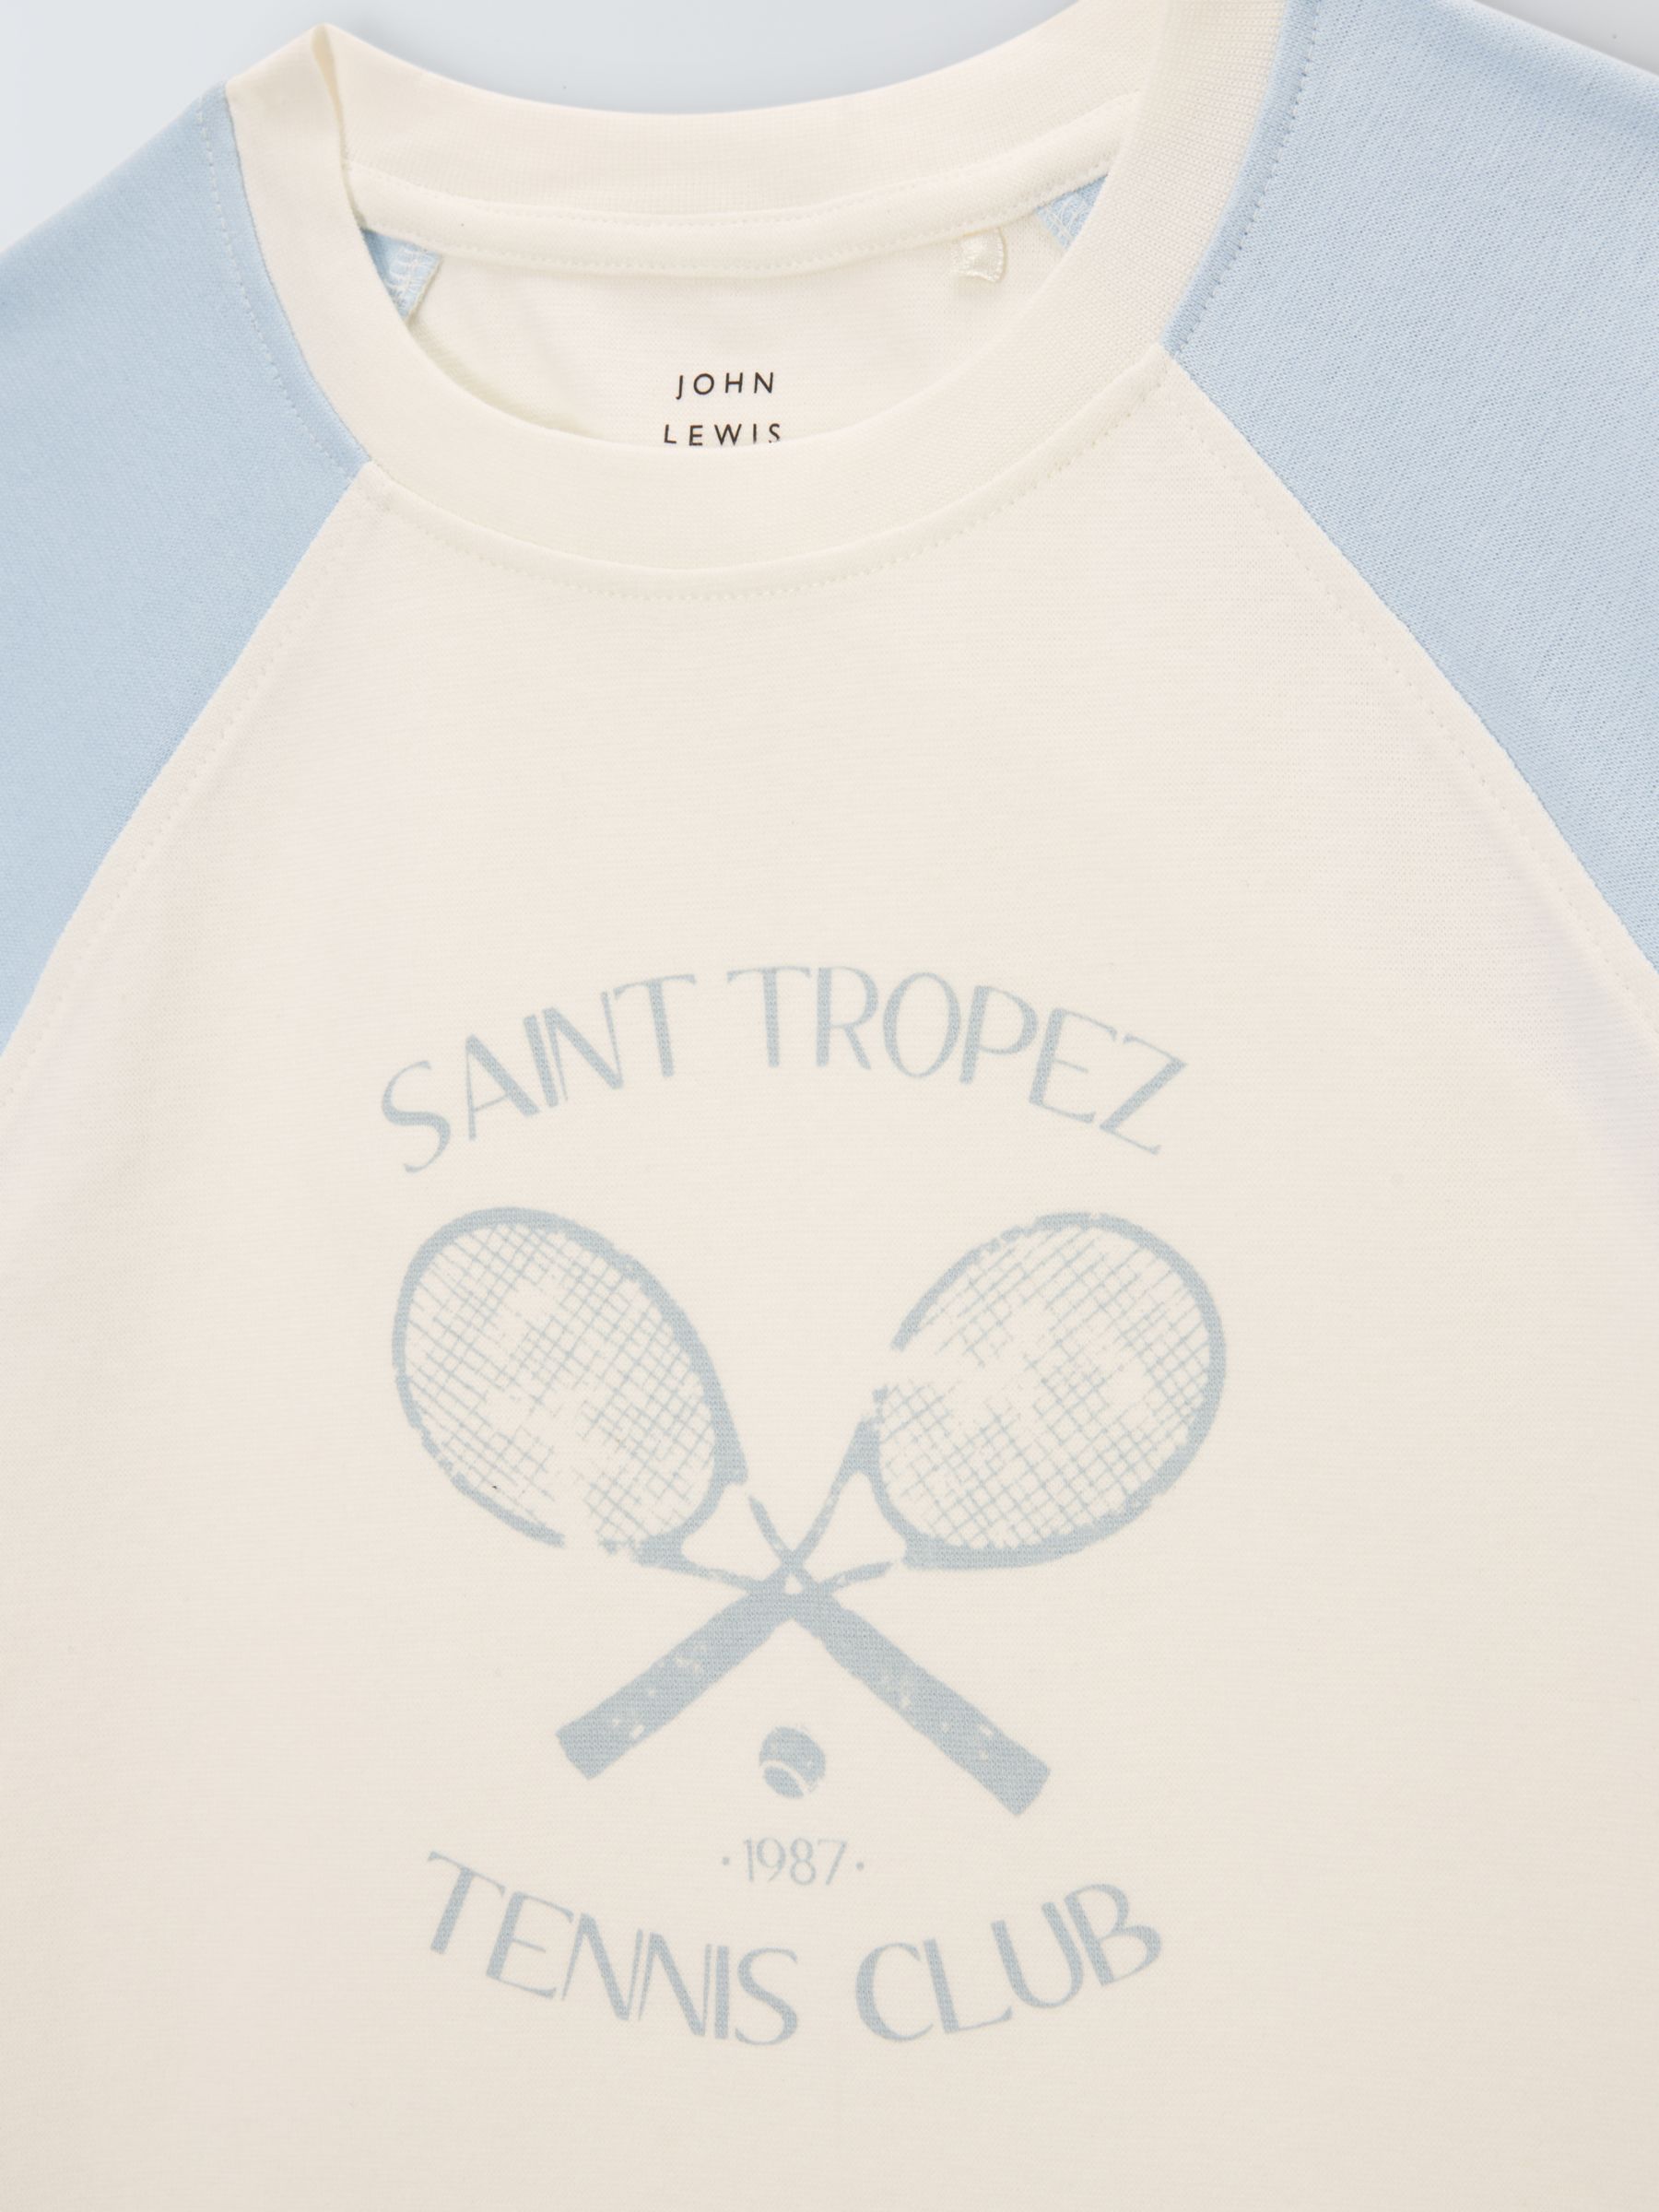 John Lewis Kids' Saint Tropez Tennis Graphic T-Shirt, Snow White/Egret, 12 years